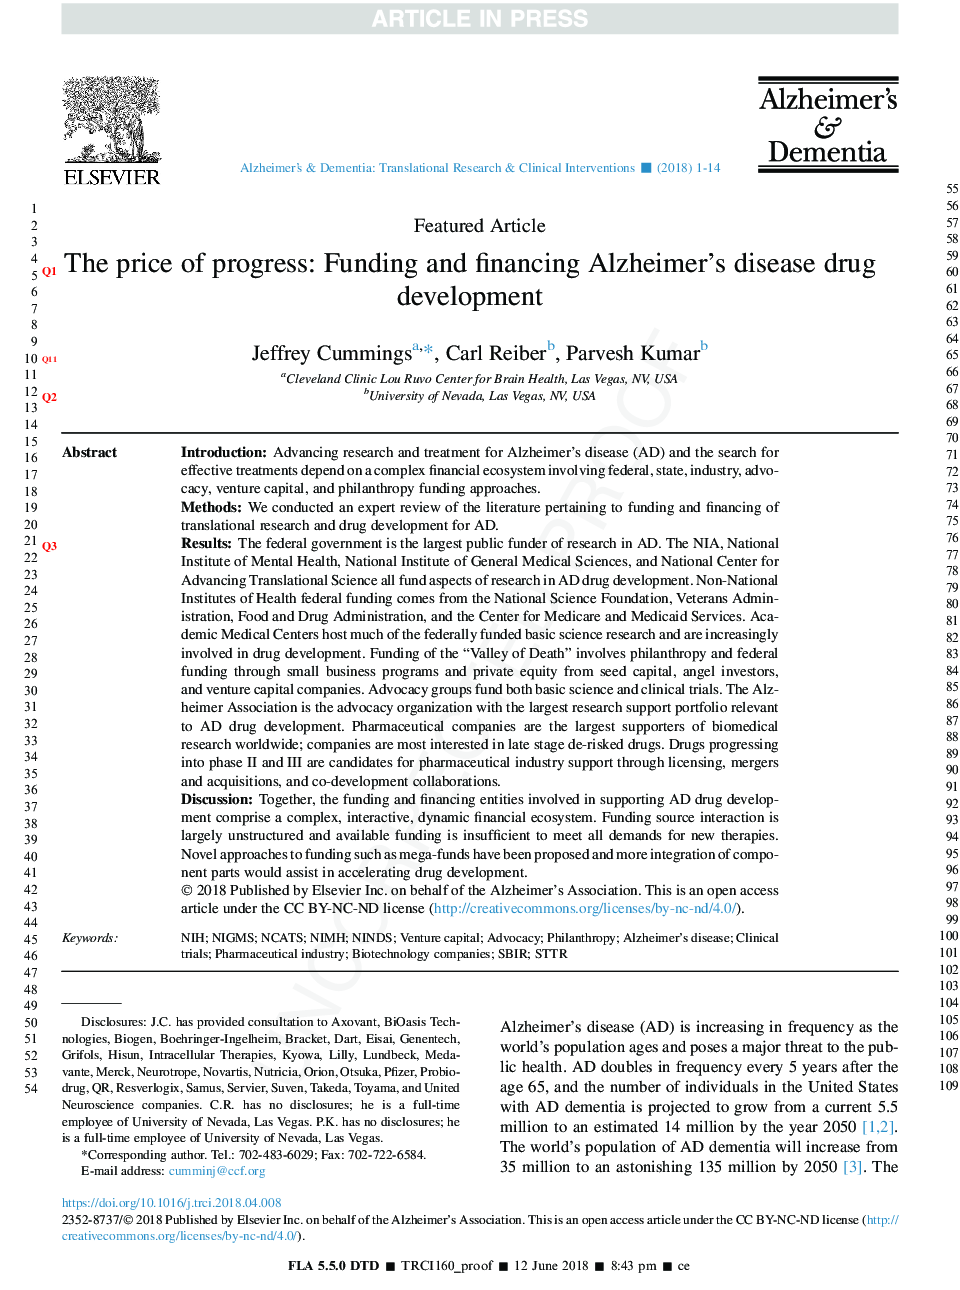 The price of progress: Funding and financing Alzheimer's disease drug development